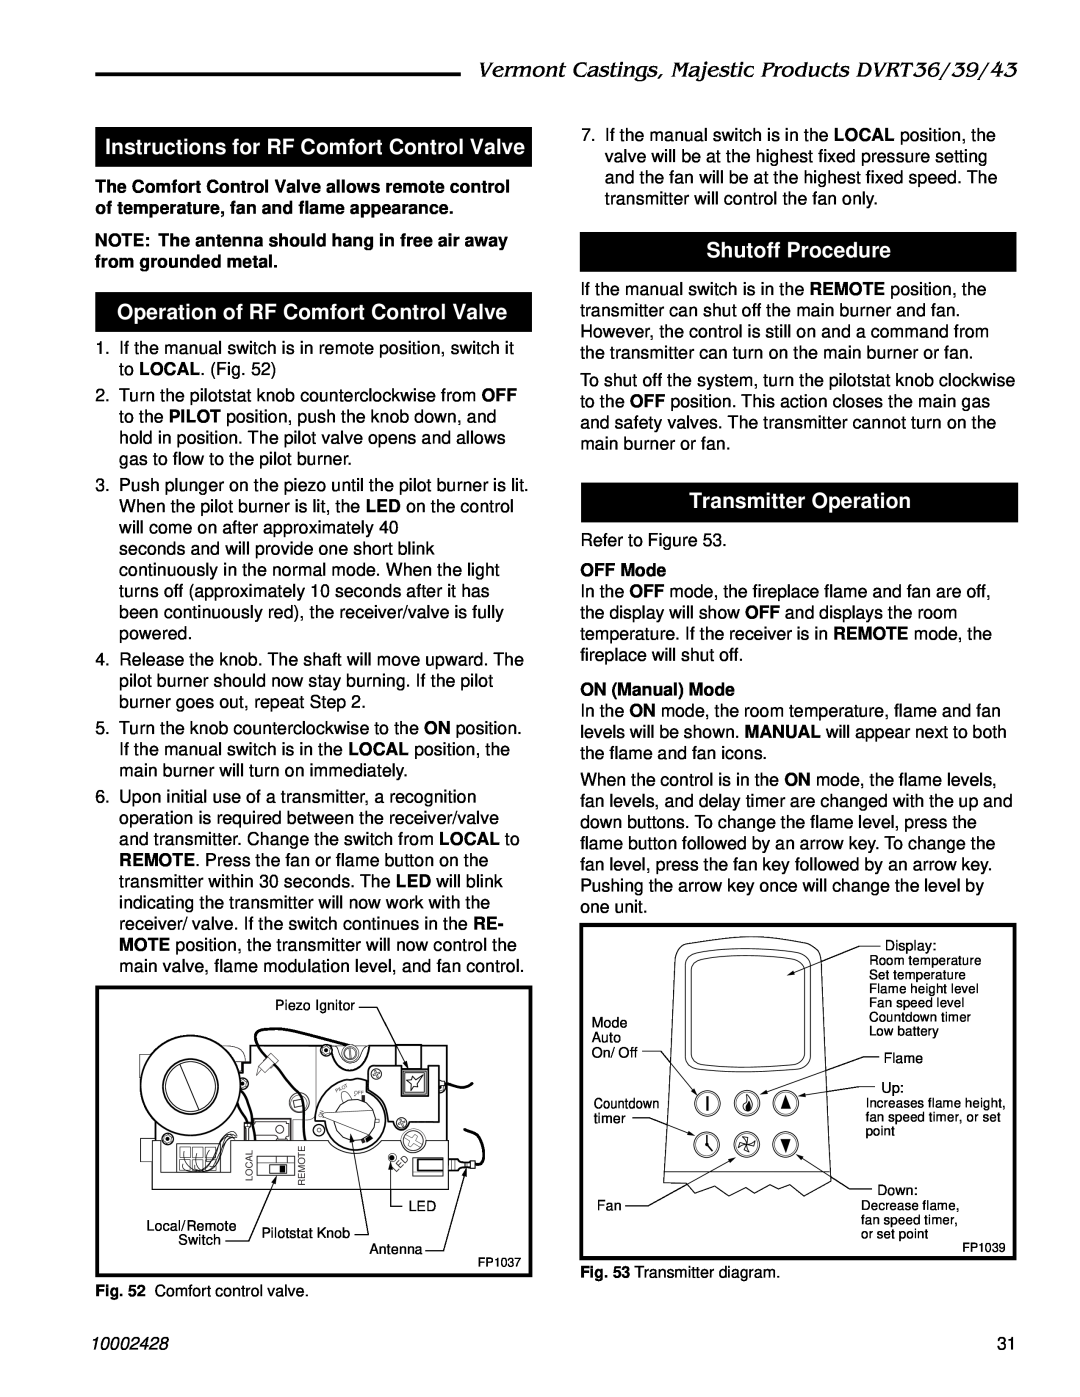 Vermont Casting DVRT36 Instructions for RF Comfort Control Valve, Operation of RF Comfort Control Valve, Shutoff Procedure 